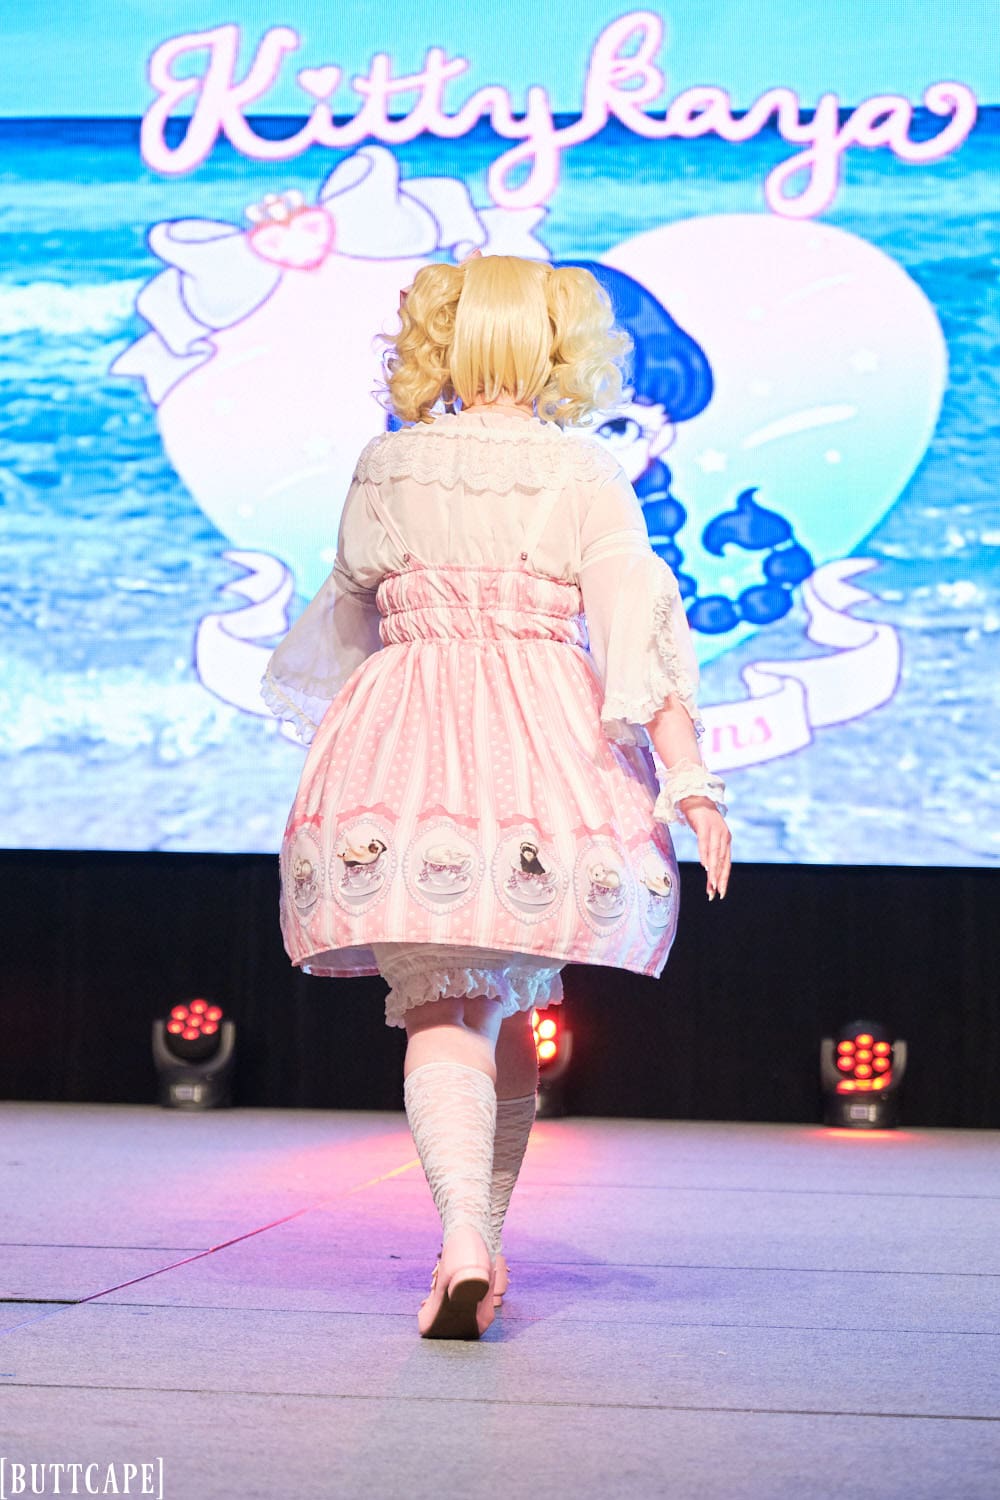 Kittykaya model 4 wearing pink lolita dress with tea cup theme and polka dot fabric - full body backside.